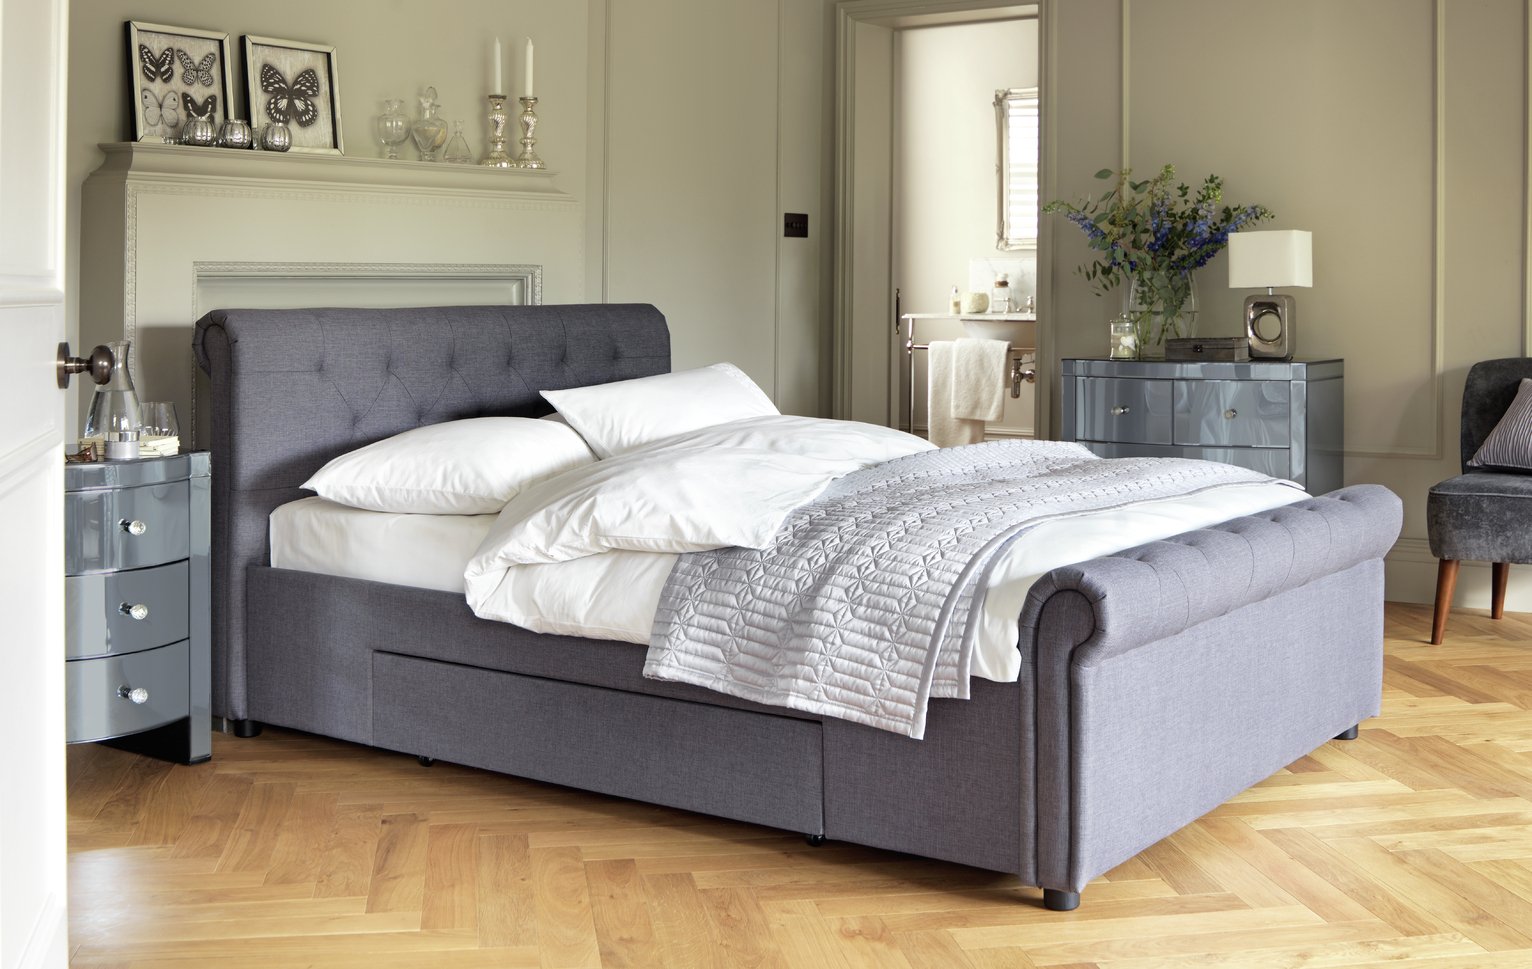 Argos Home Newbury 2 Drawer Kingsize Bed Frame Review